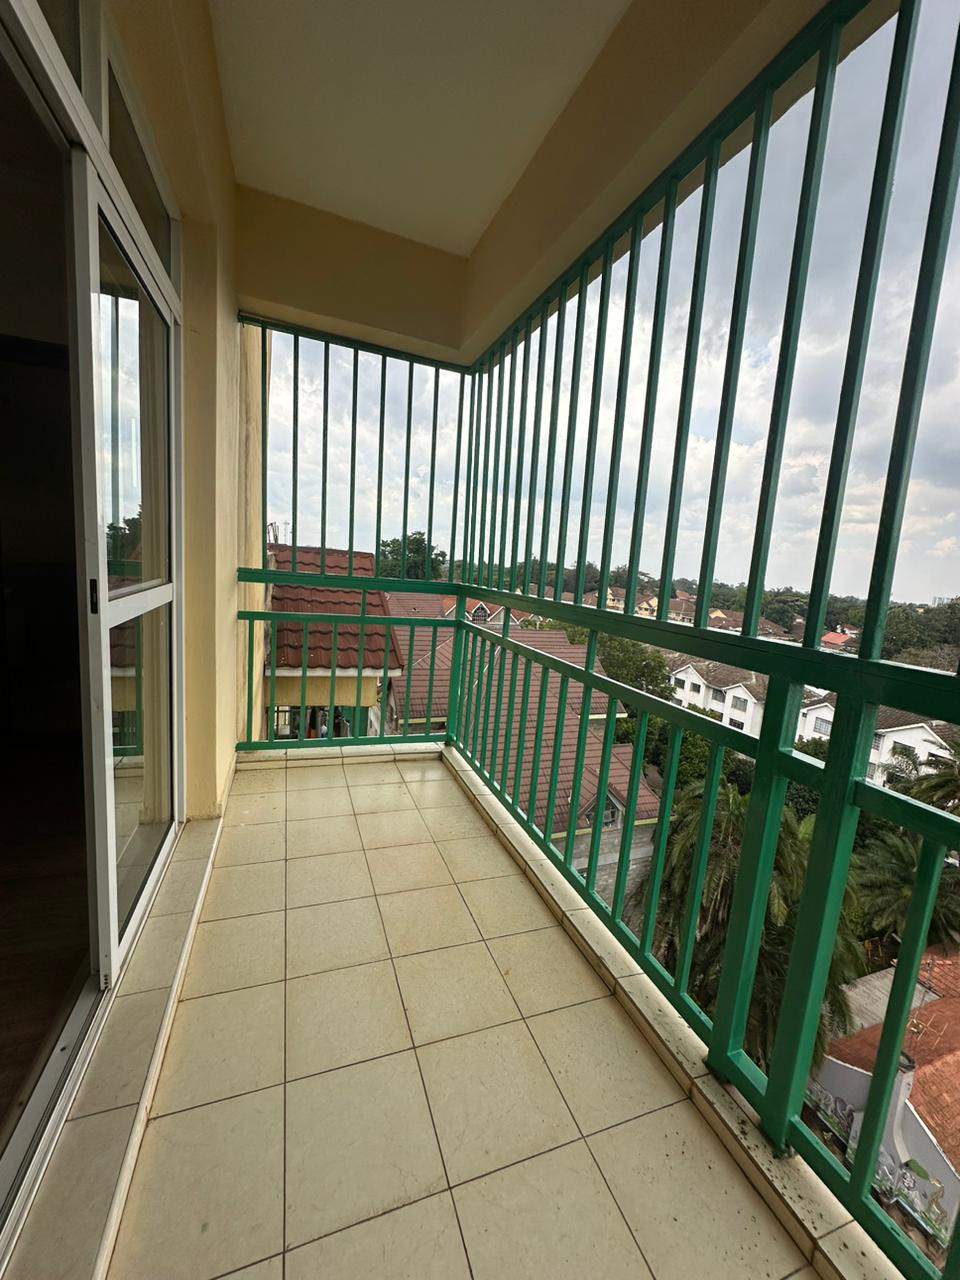 5 BR Plus DSQ for rent in Lavington, Nairobi. 2 bedrooms have large Balconies. Duplex Penthouses apartment. Rent: 120,000 Musilli Homes